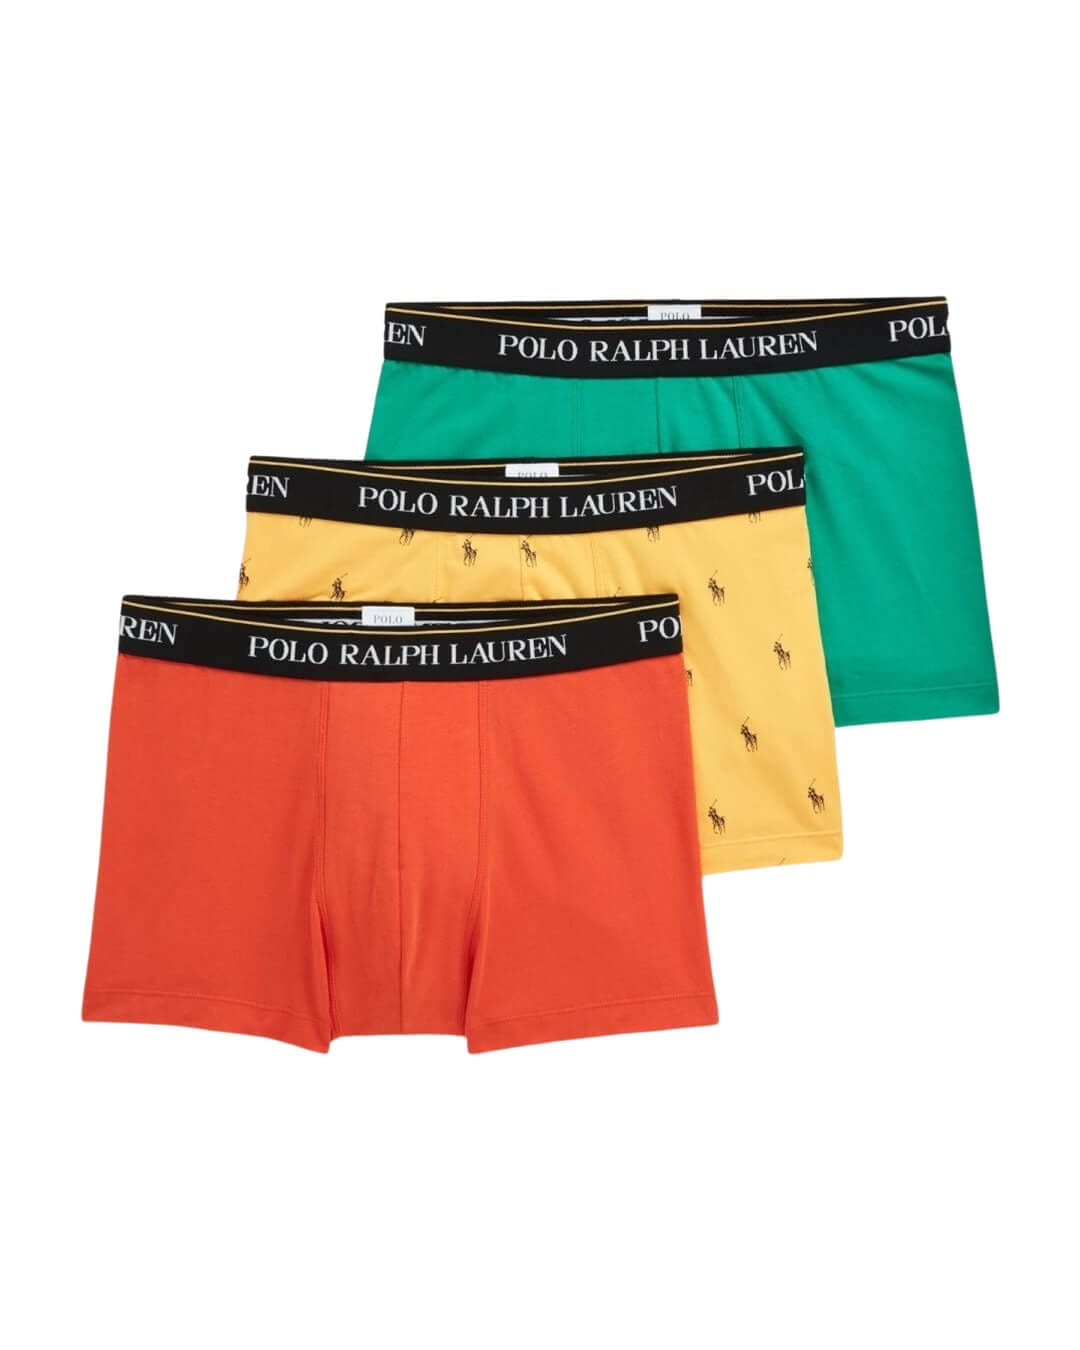 Polo Ralph Lauren Underwear Polo Ralph Lauren Boxer Brief 3-Pack Orange, Yellow &amp; Green